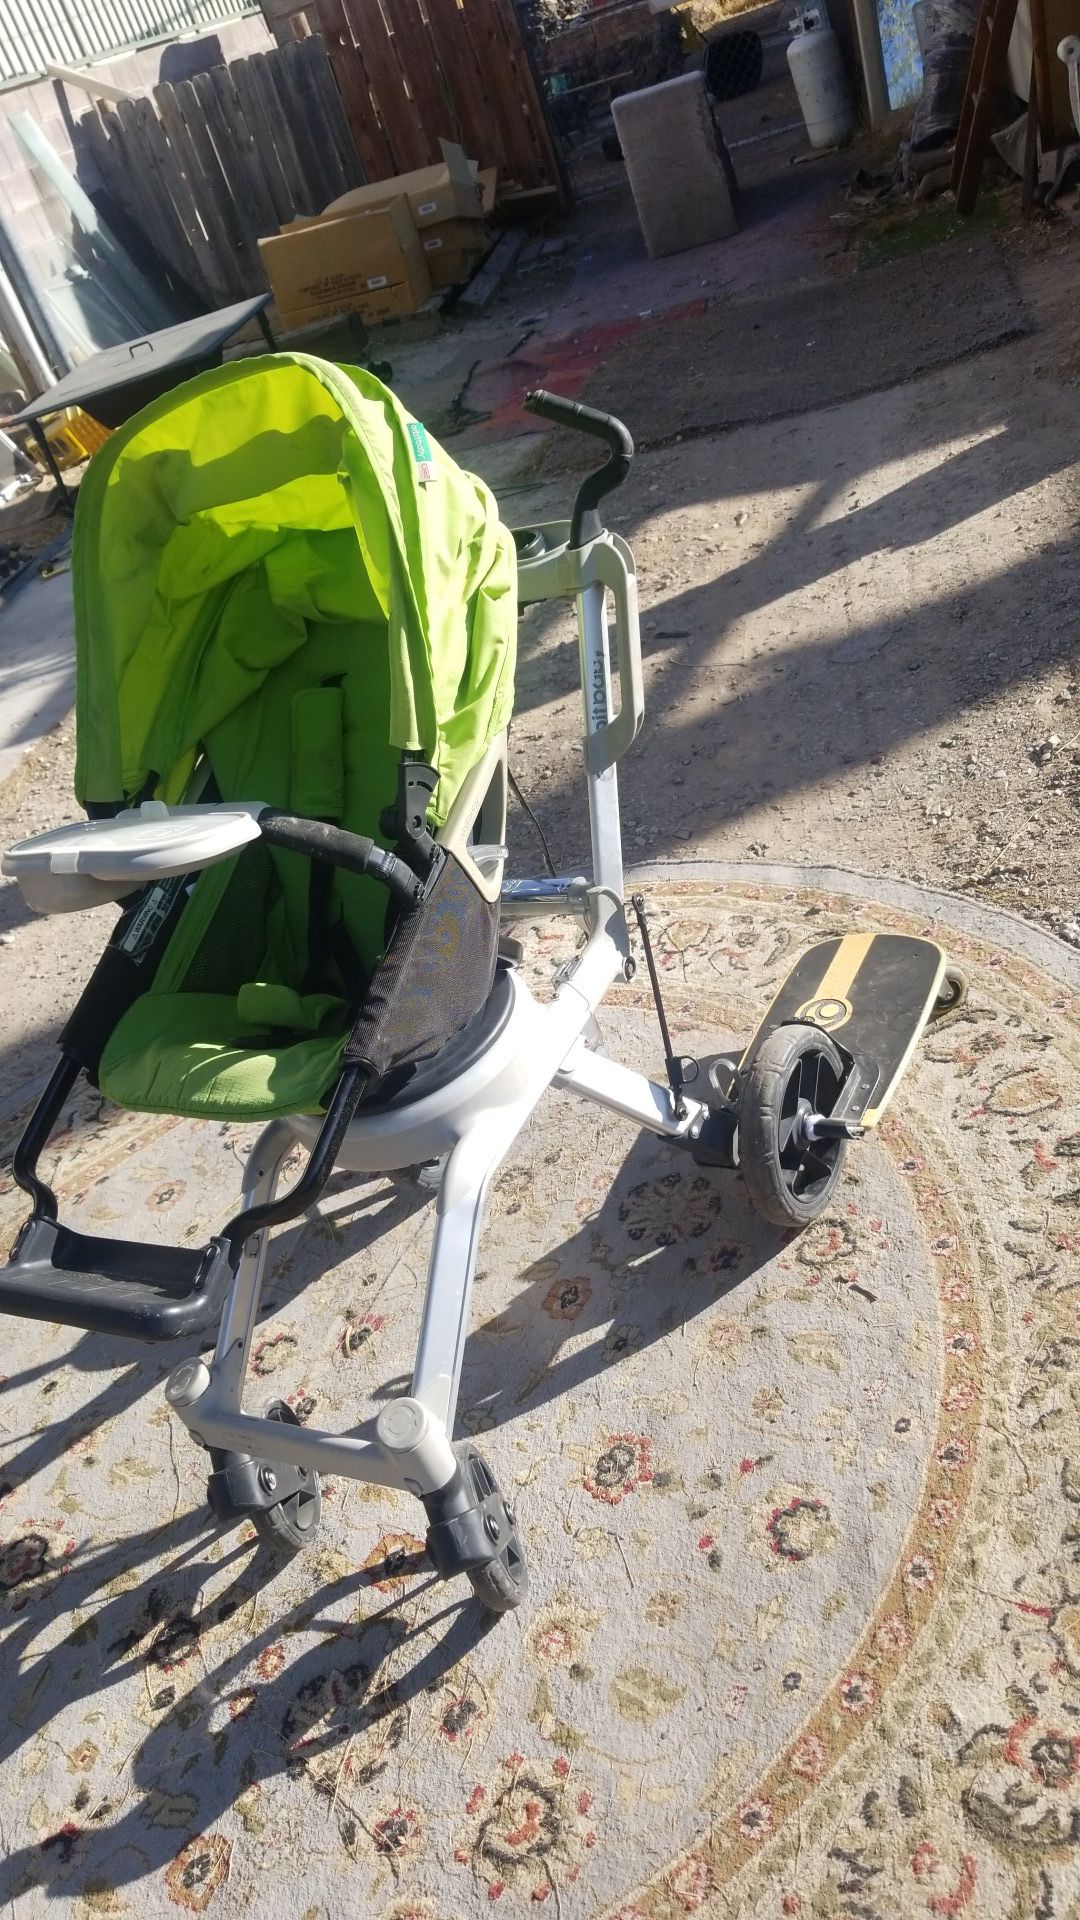 Orbit baby stroller with kick board